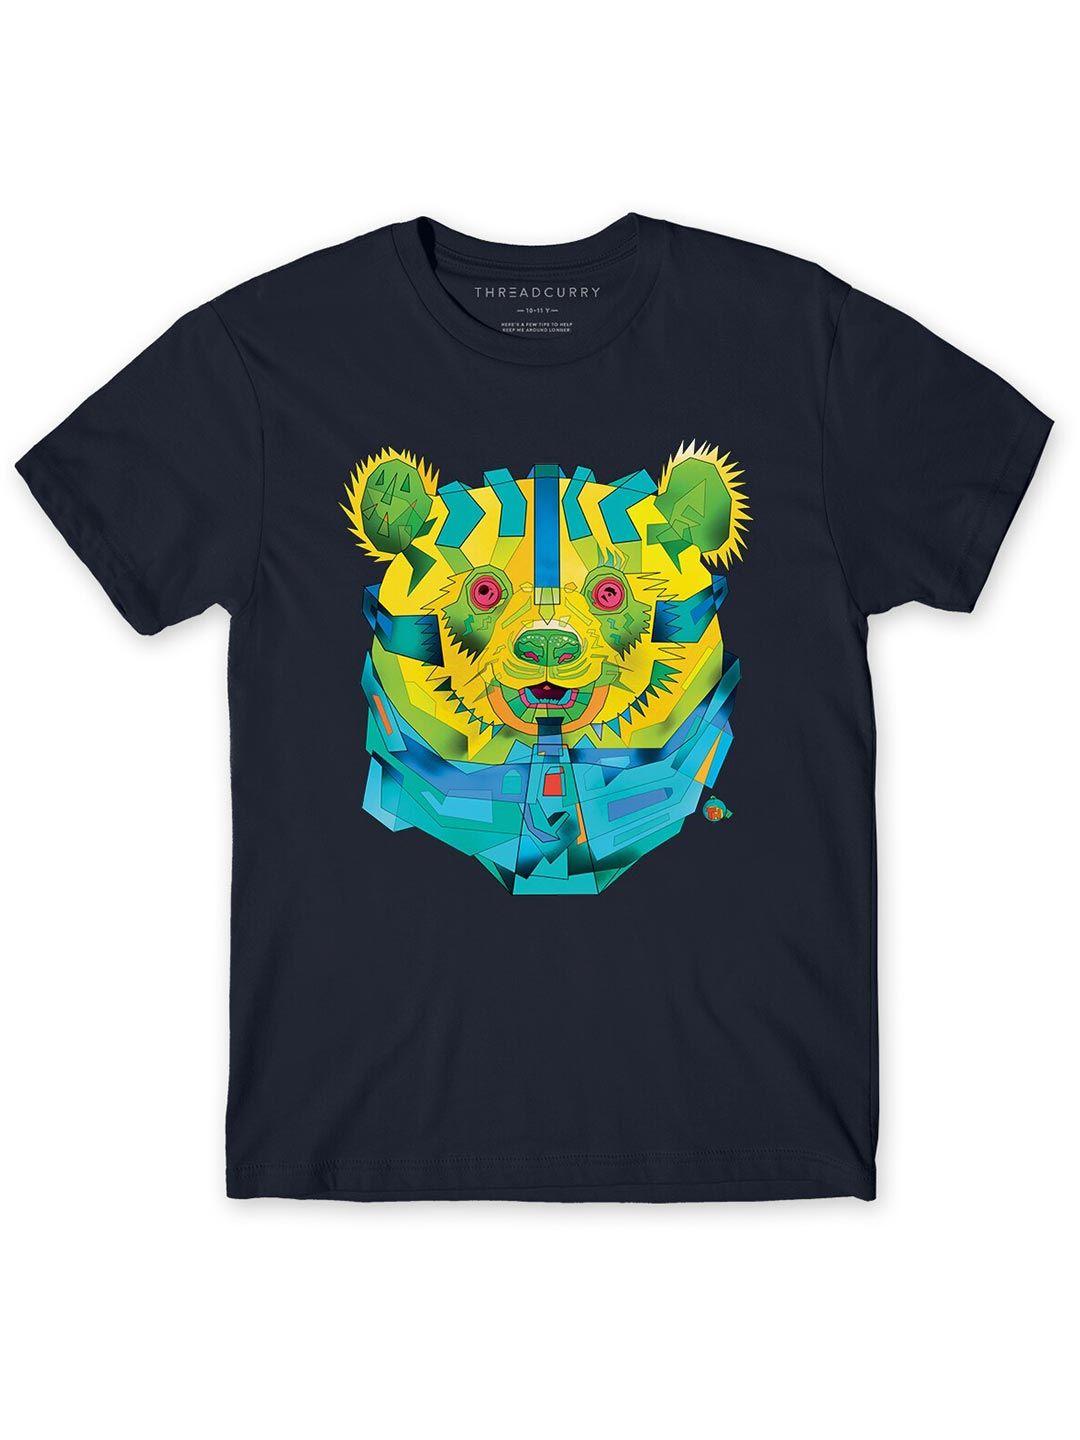 threadcurry boys navy blue panda printed t-shirt